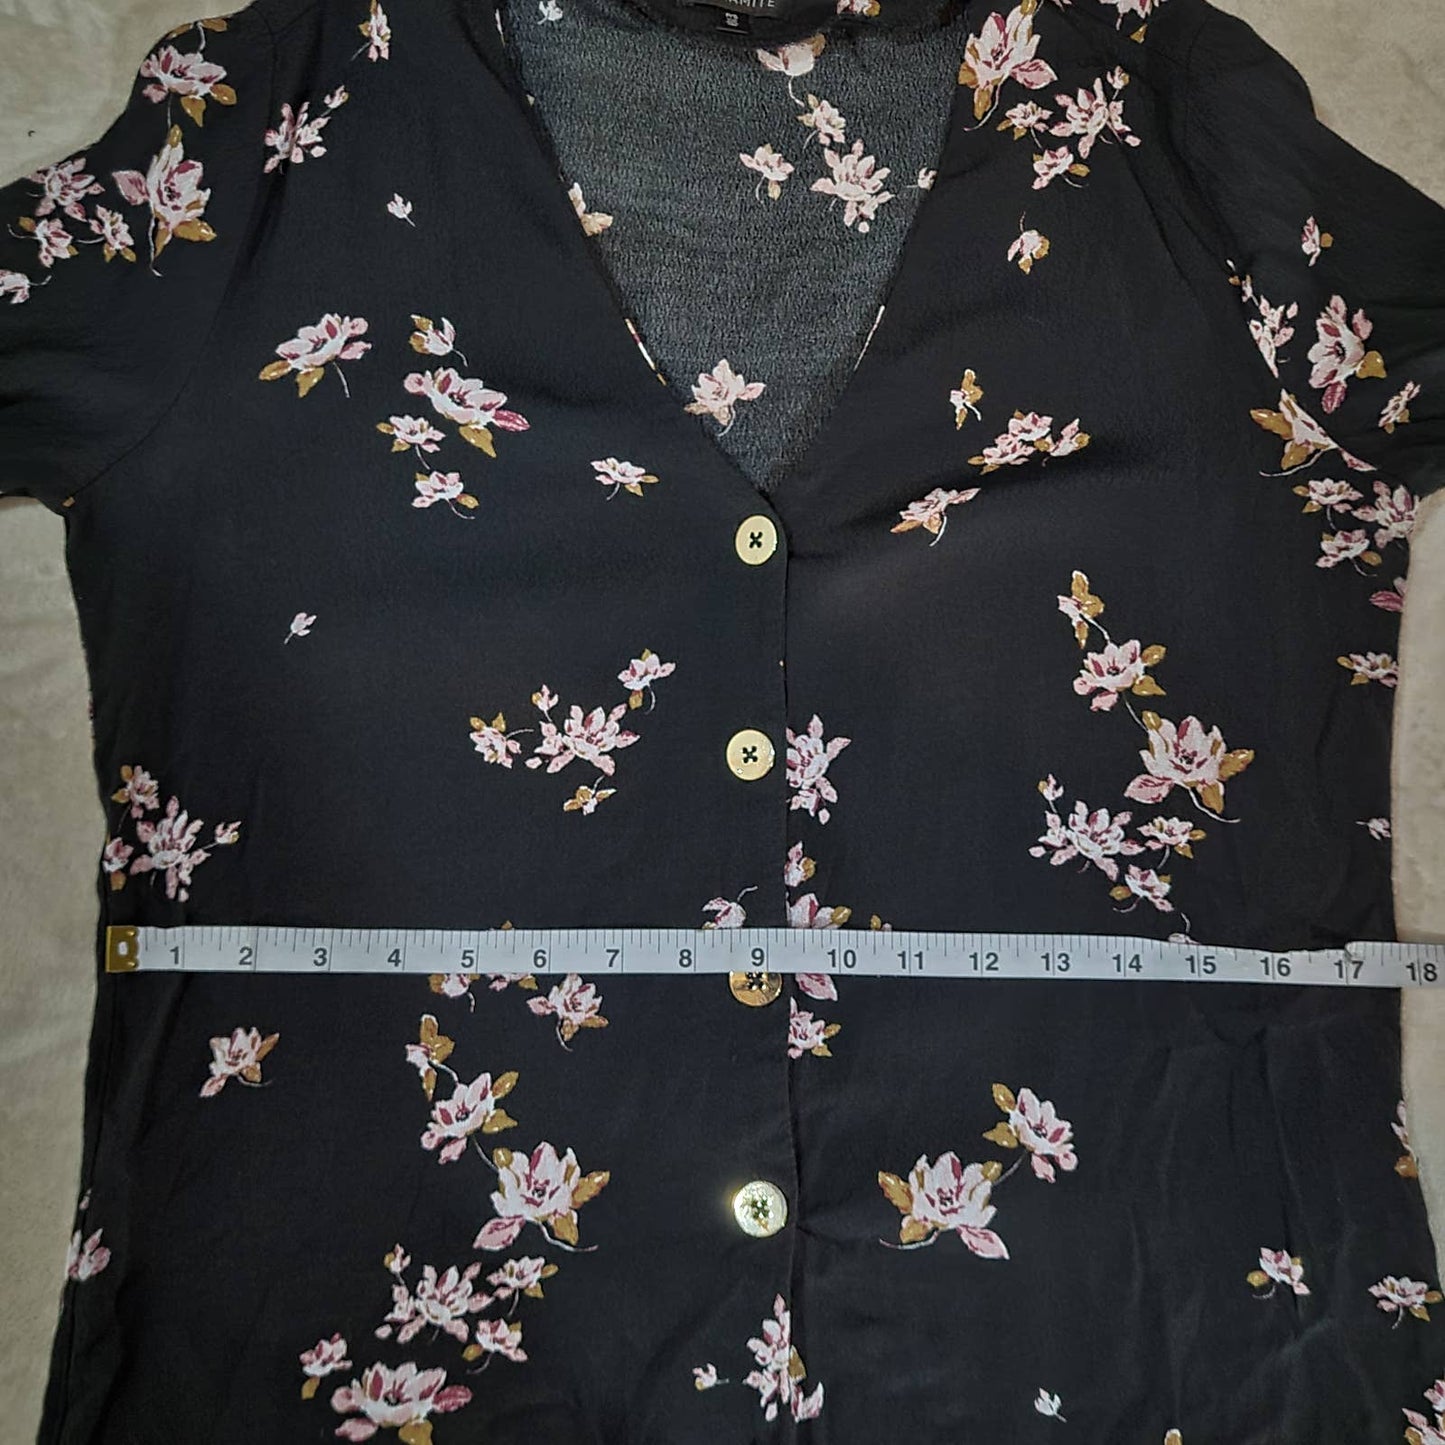 Dynamite Black Floral Button Up Blouse - Size SmallMarkita's ClosetDynamite